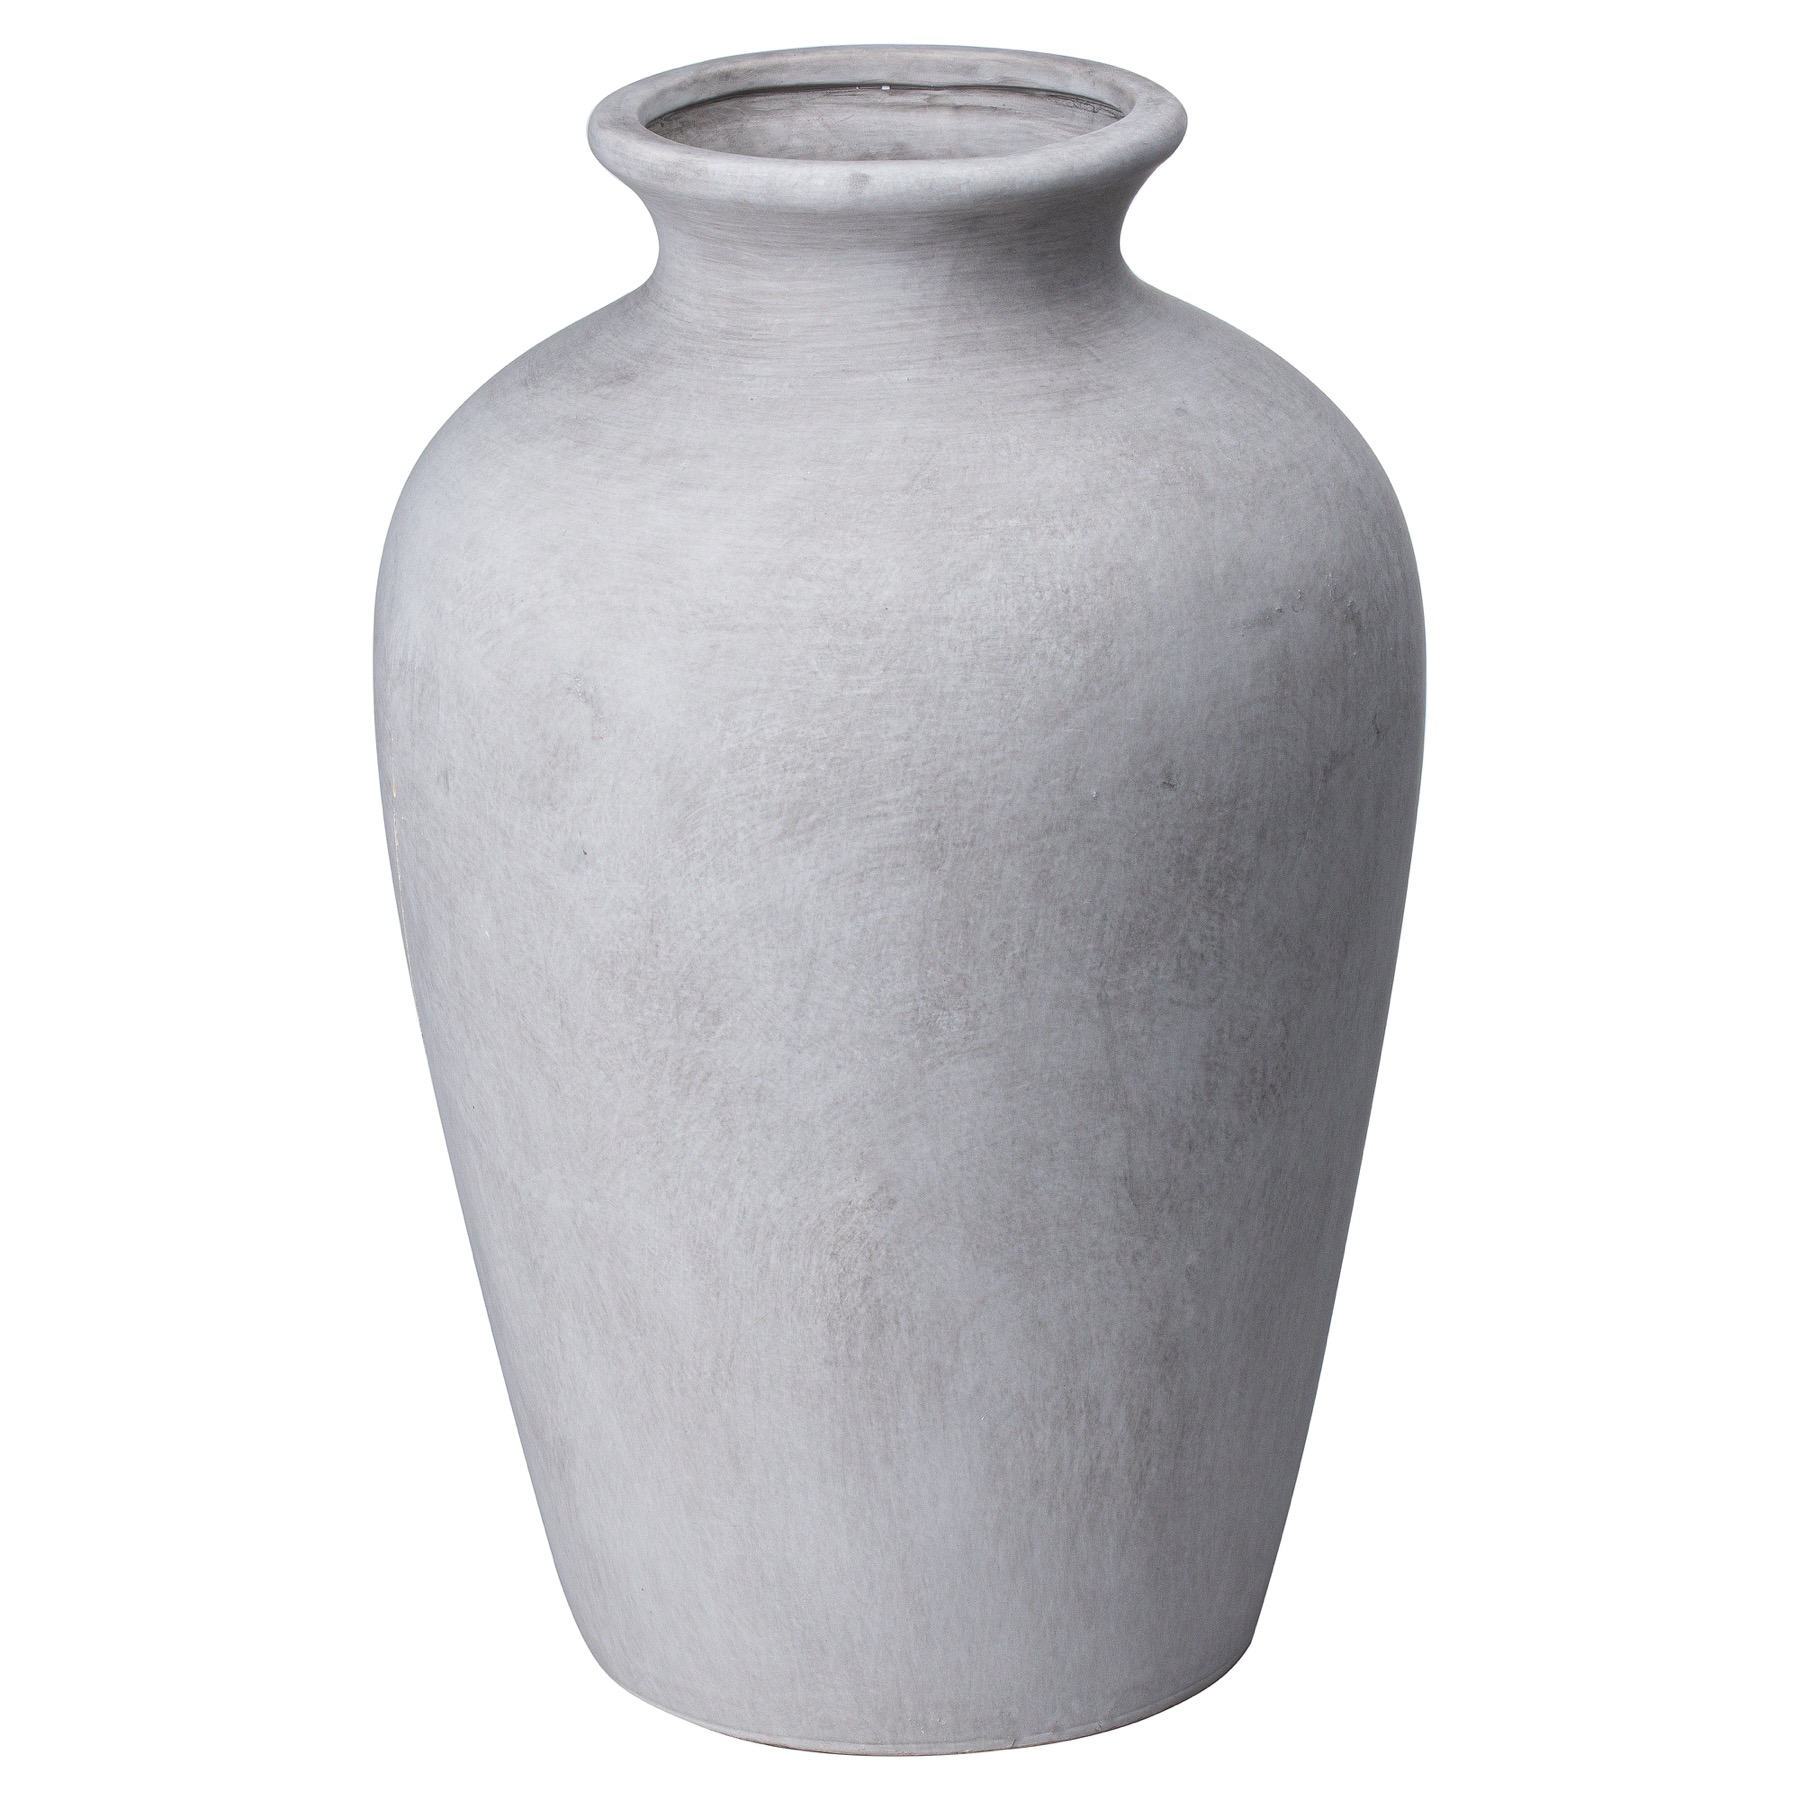 Darcy Chours Stone Vase - Image 1